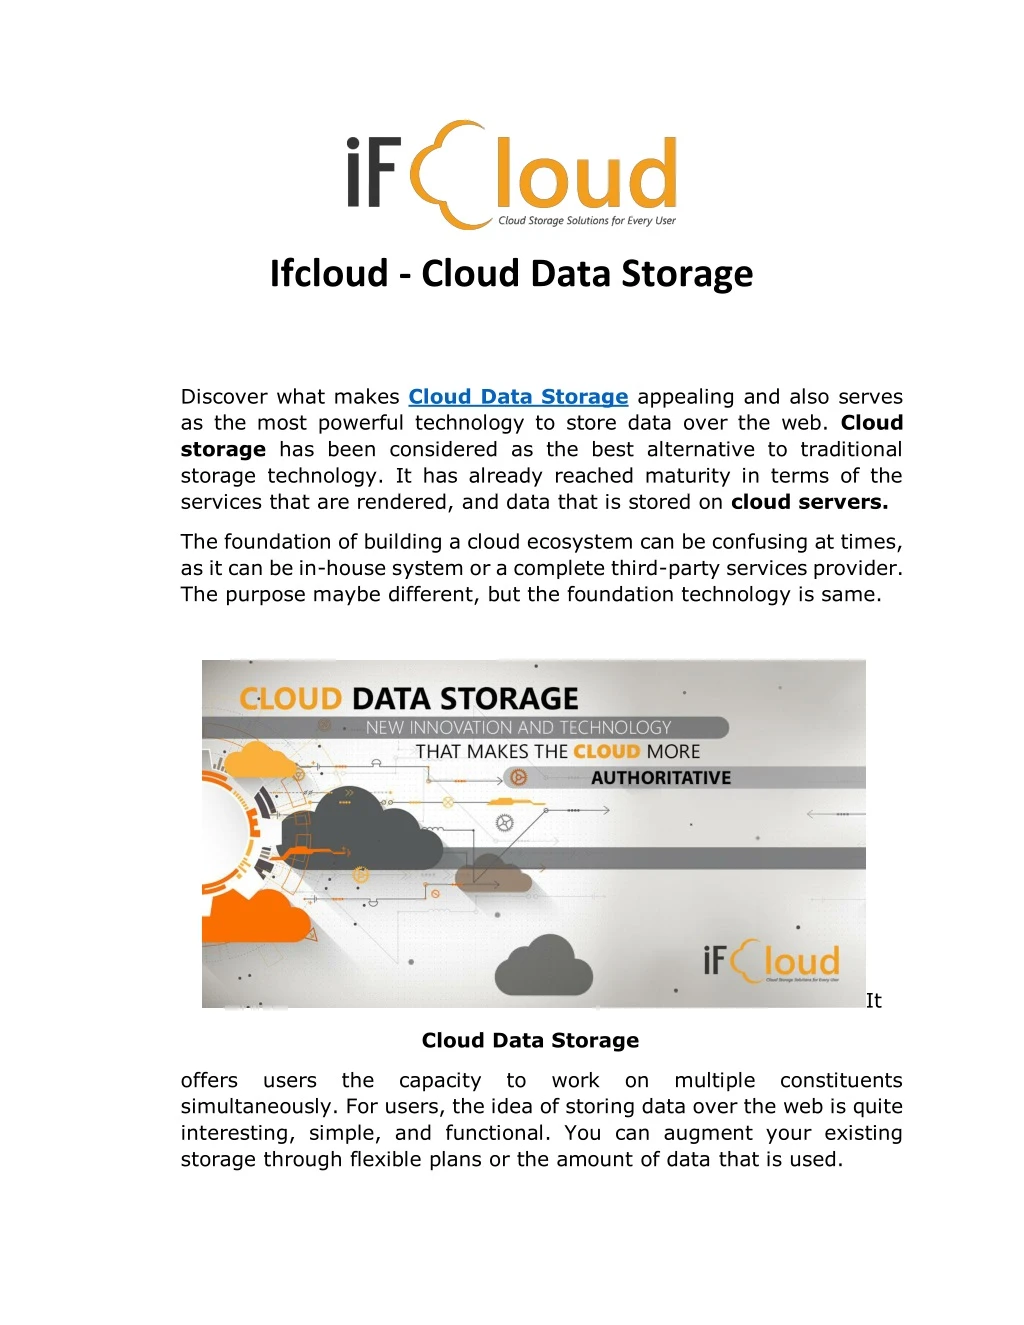 ifcloud cloud data storage